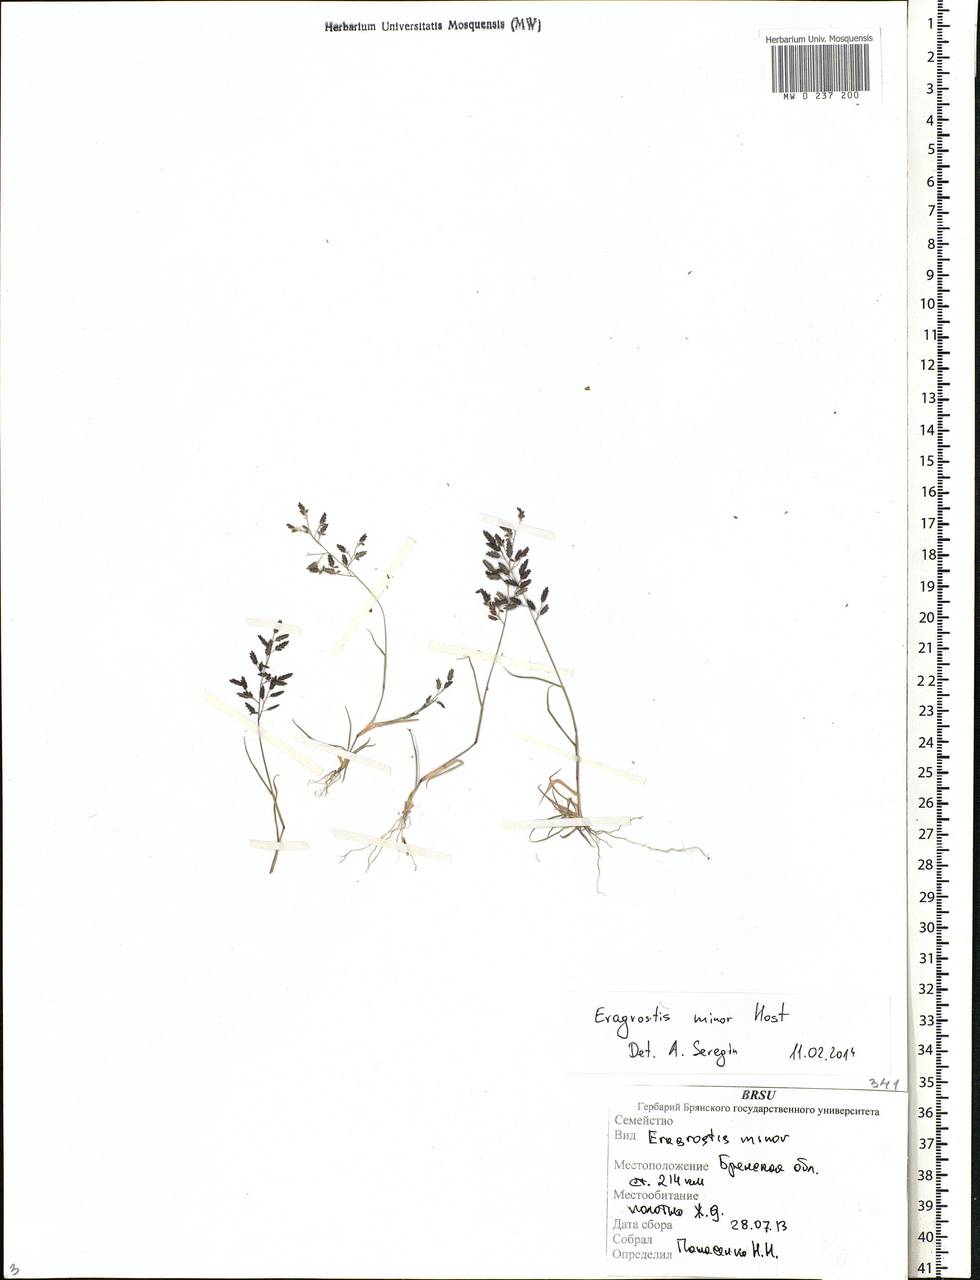 Eragrostis minor Host, Eastern Europe, Western region (E3) (Russia)